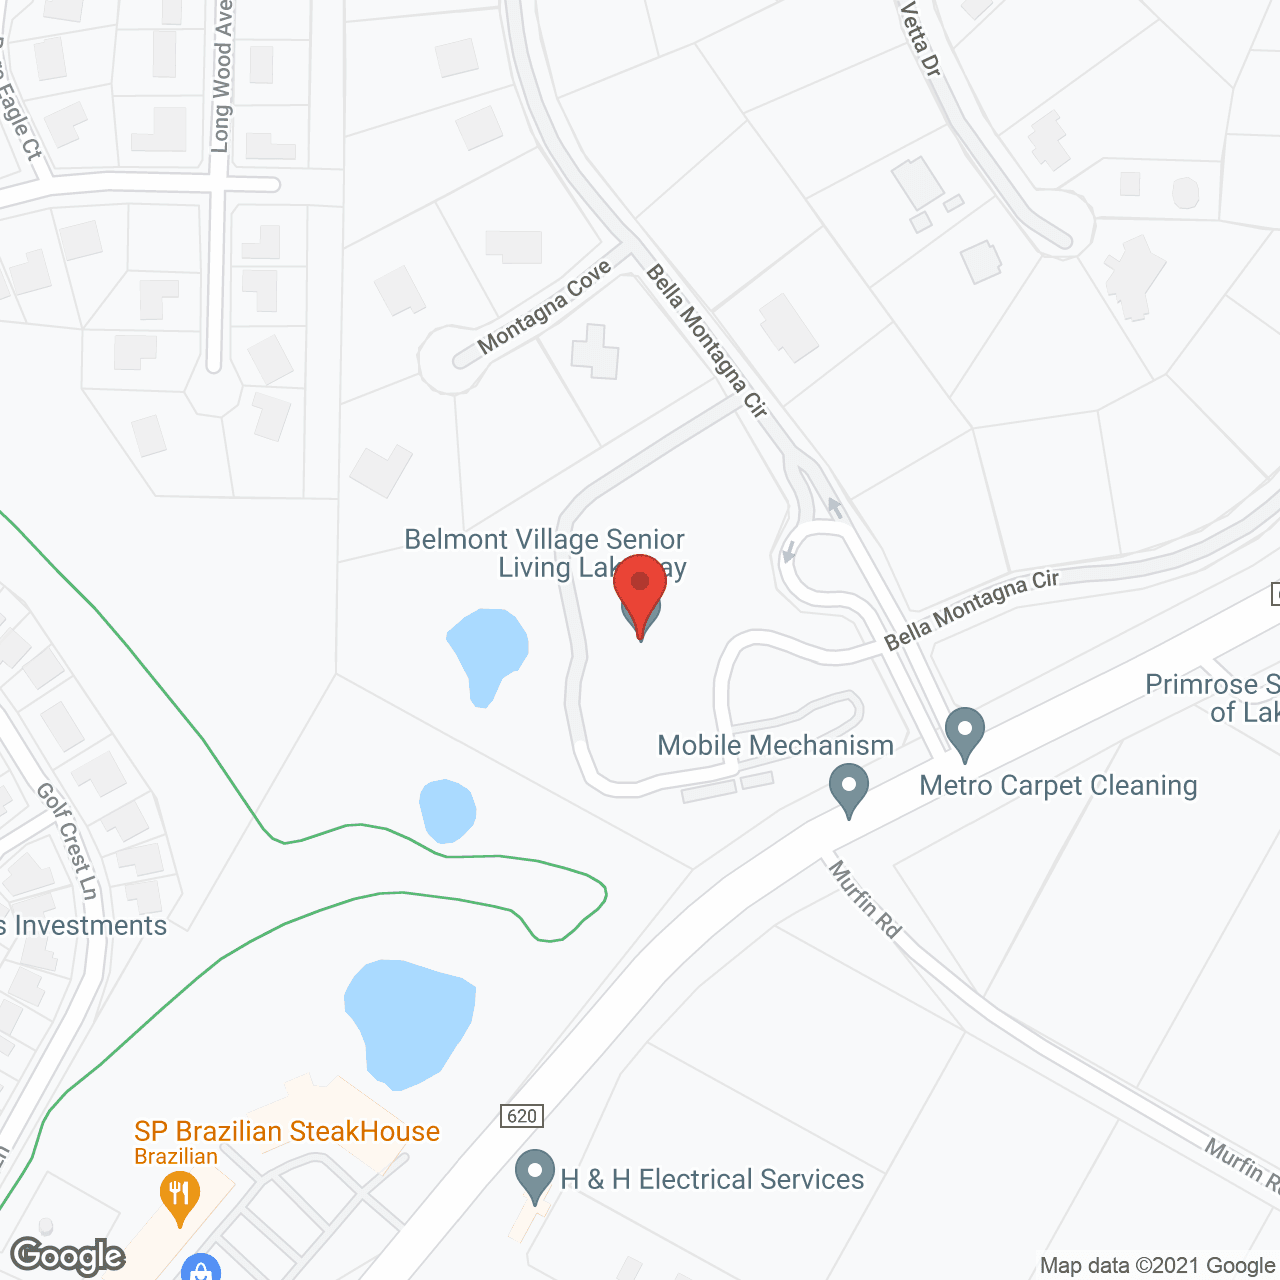 Belmont Village Lakeway in google map